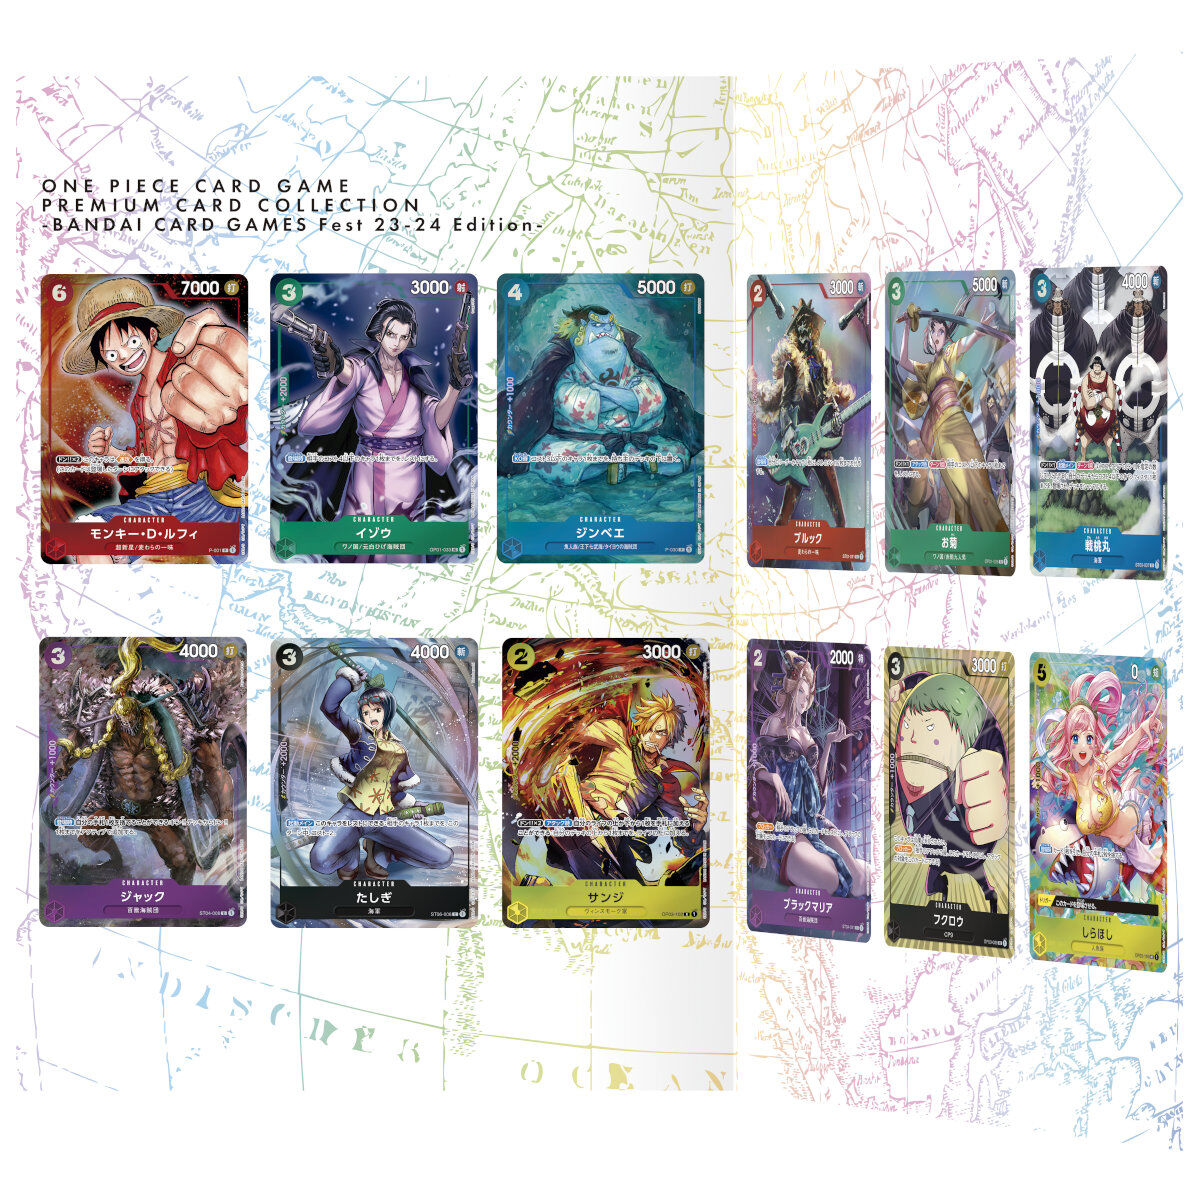 BANDAI CARD GAMES Fest 23-24 Edition-ナミ